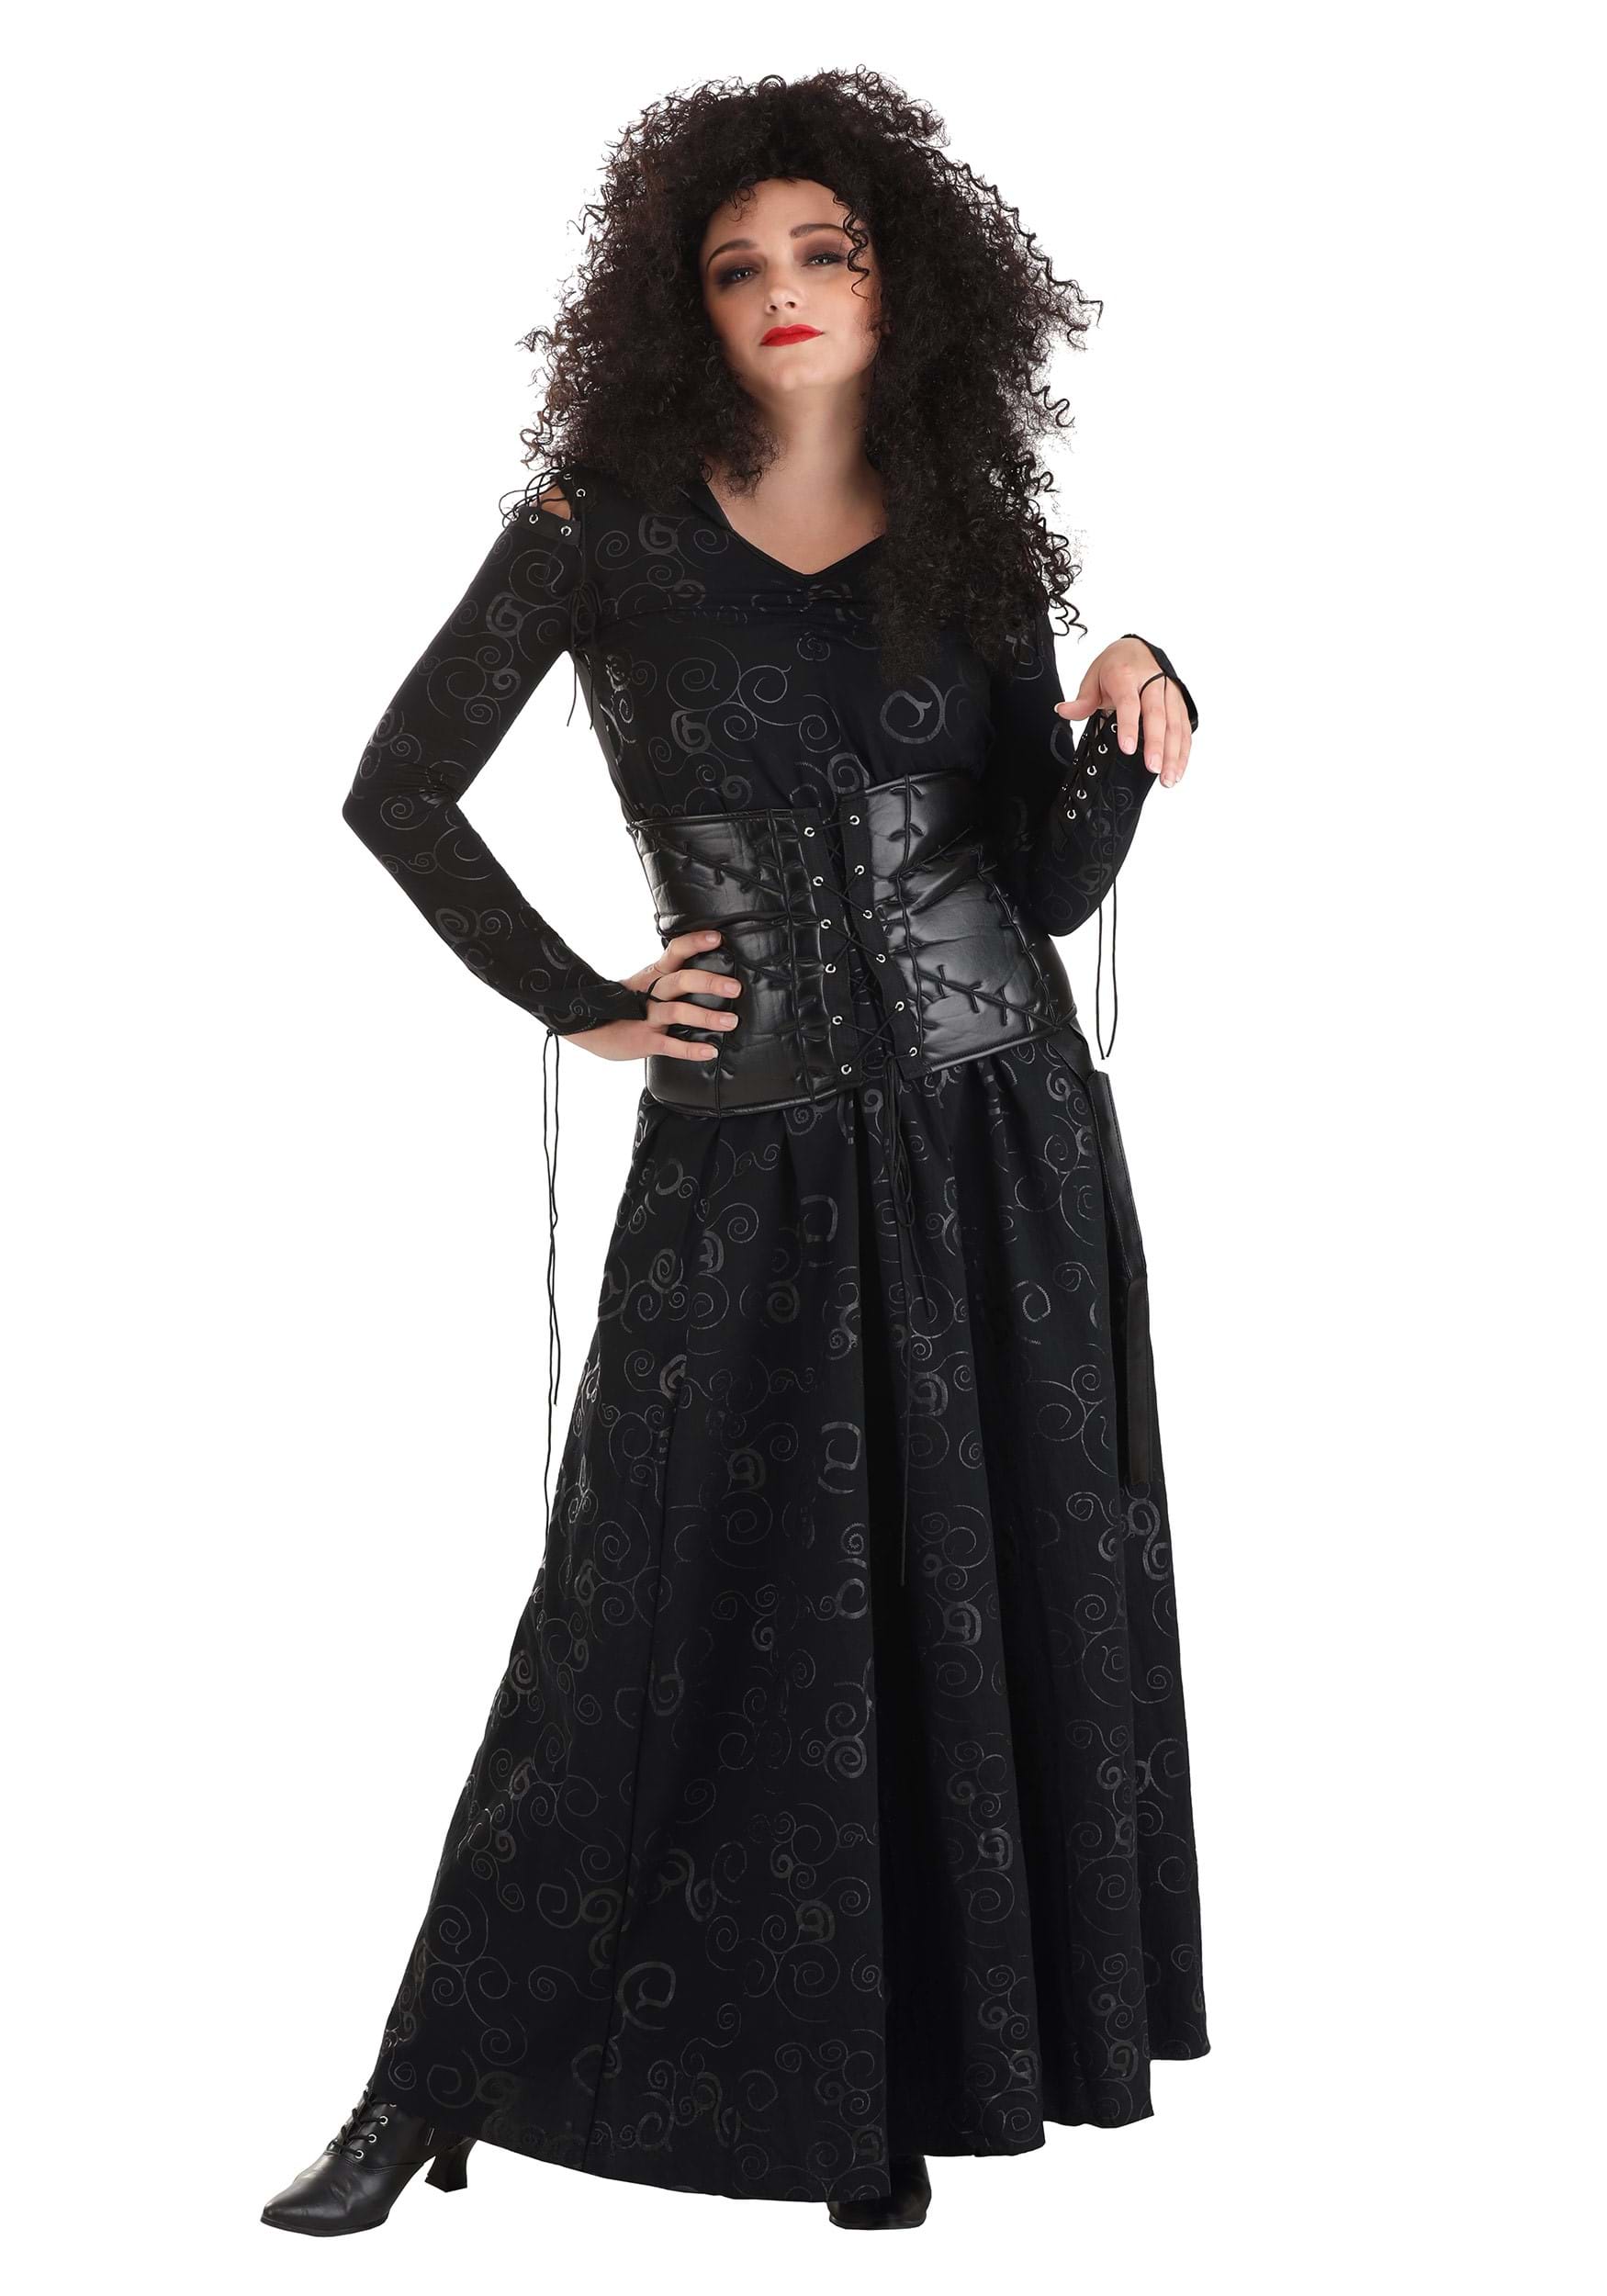 Photos - Fancy Dress Potter FUN Costumes Harry  Series Women's Deluxe Bellatrix Costume Black FU 